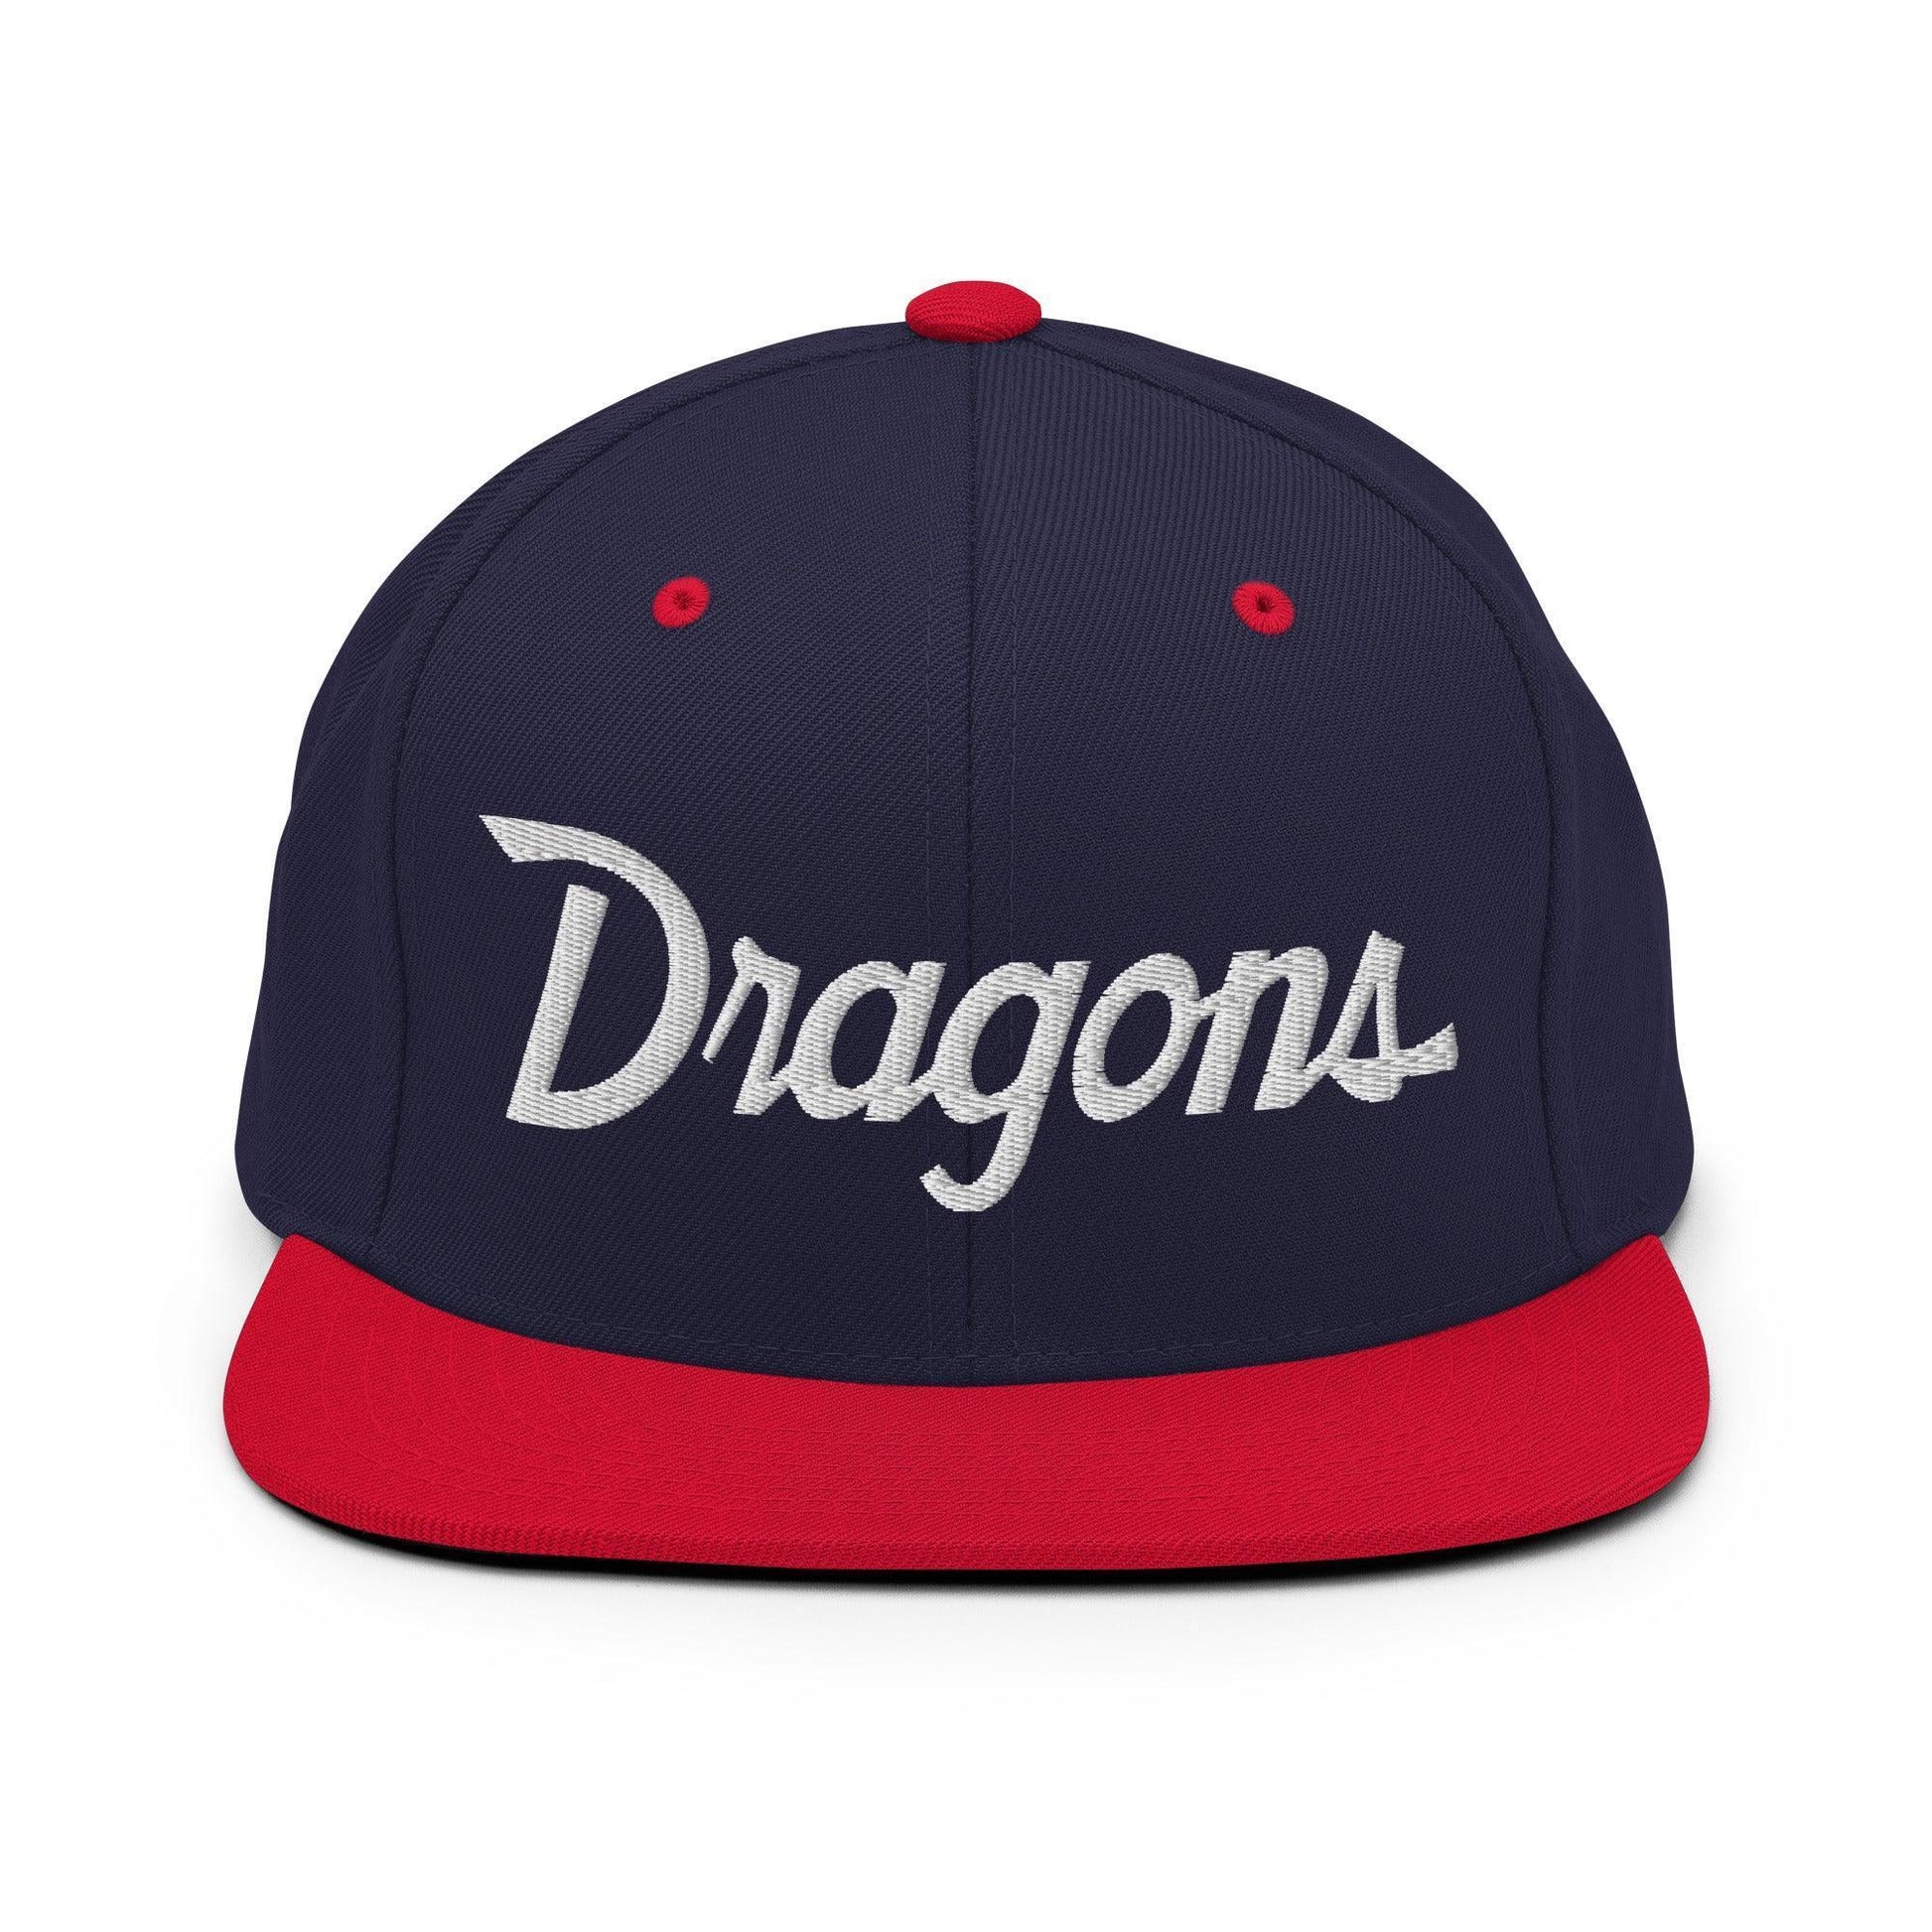 Dragons School Mascot Snapback Hat Navy/ Red